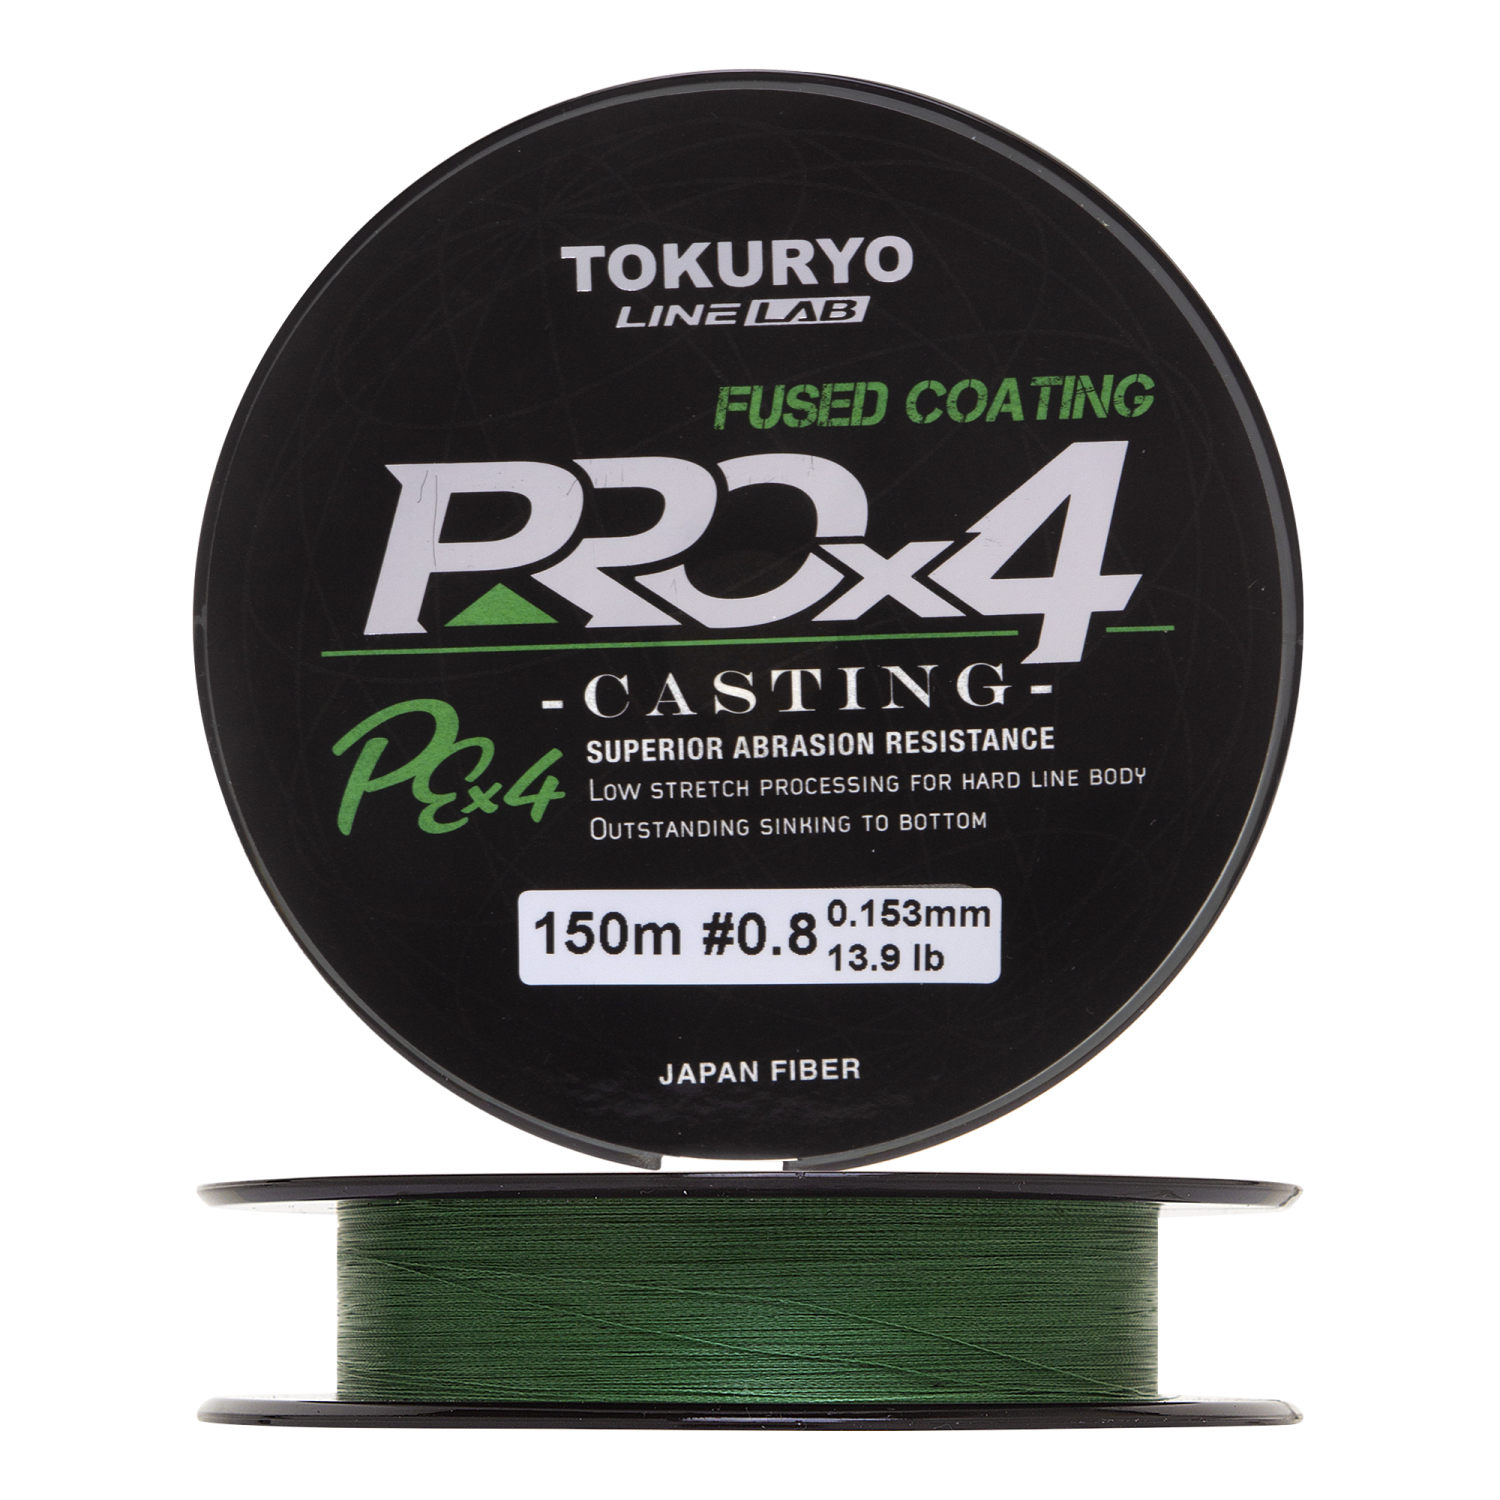 шнур tokuryo pro pe x4 casting 150м dark green 0 8 0 153мм 13 9lb Шнур плетеный Tokuryo Pro PE X4 #0,8 0,153мм 150м (dark green)